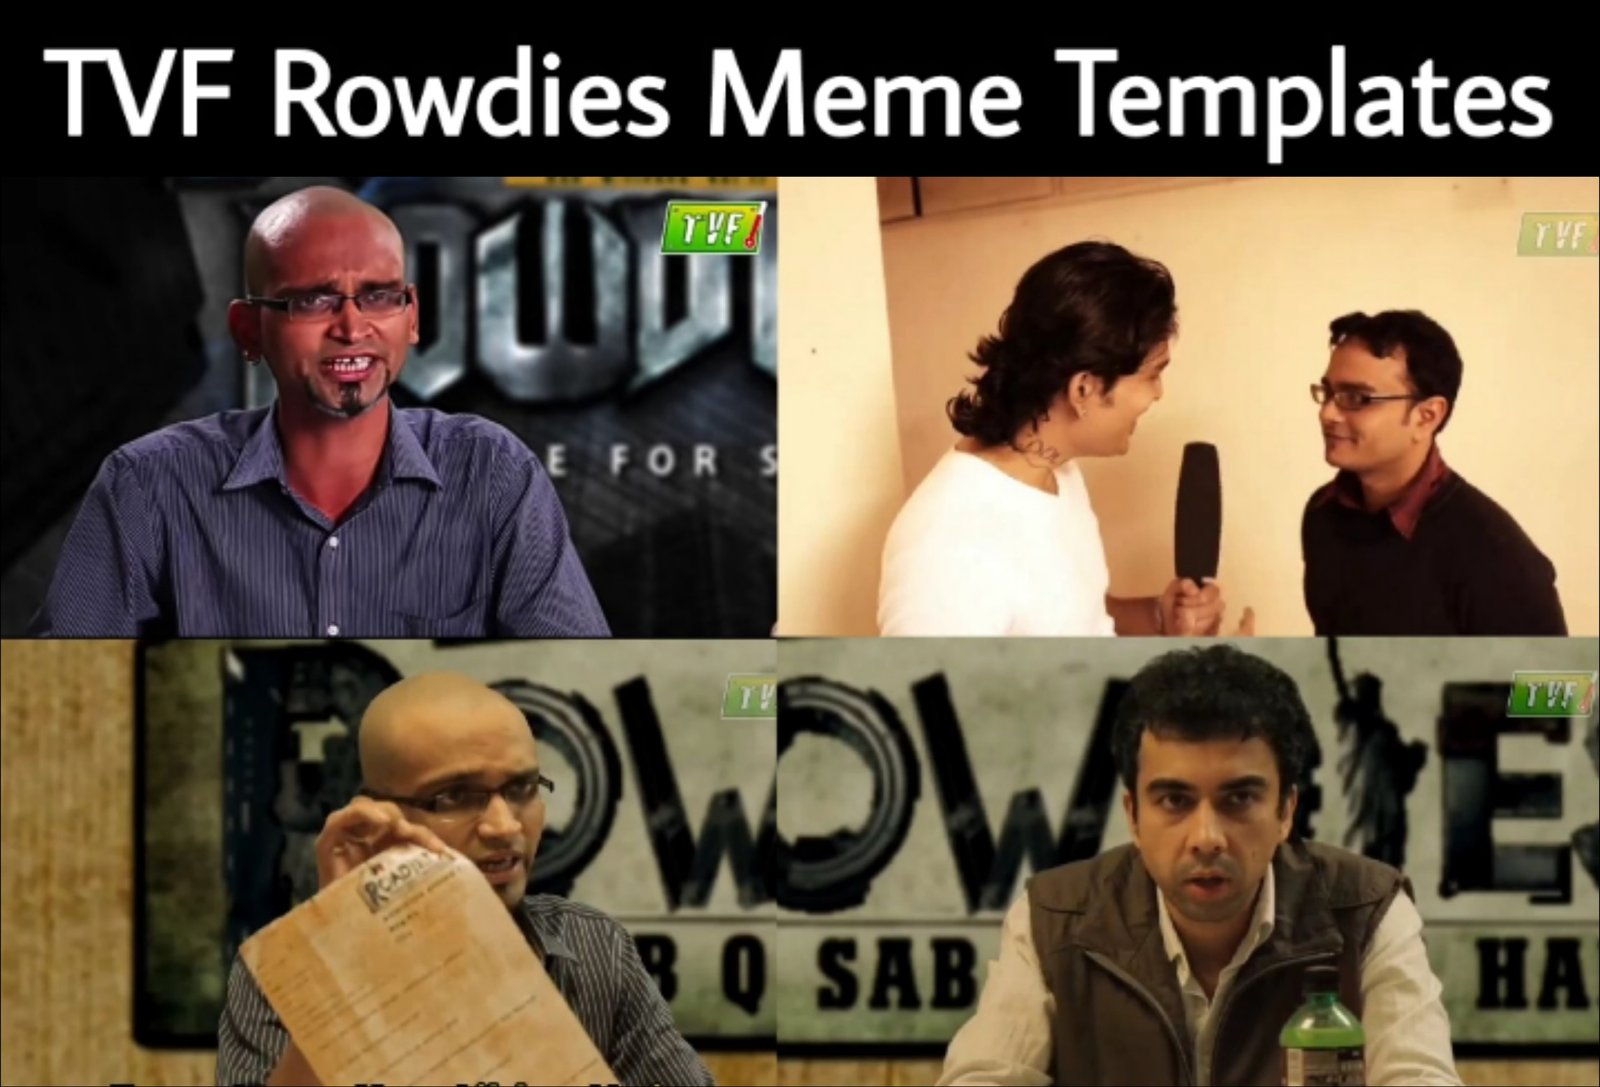 TVF Rowdies Meme Templates